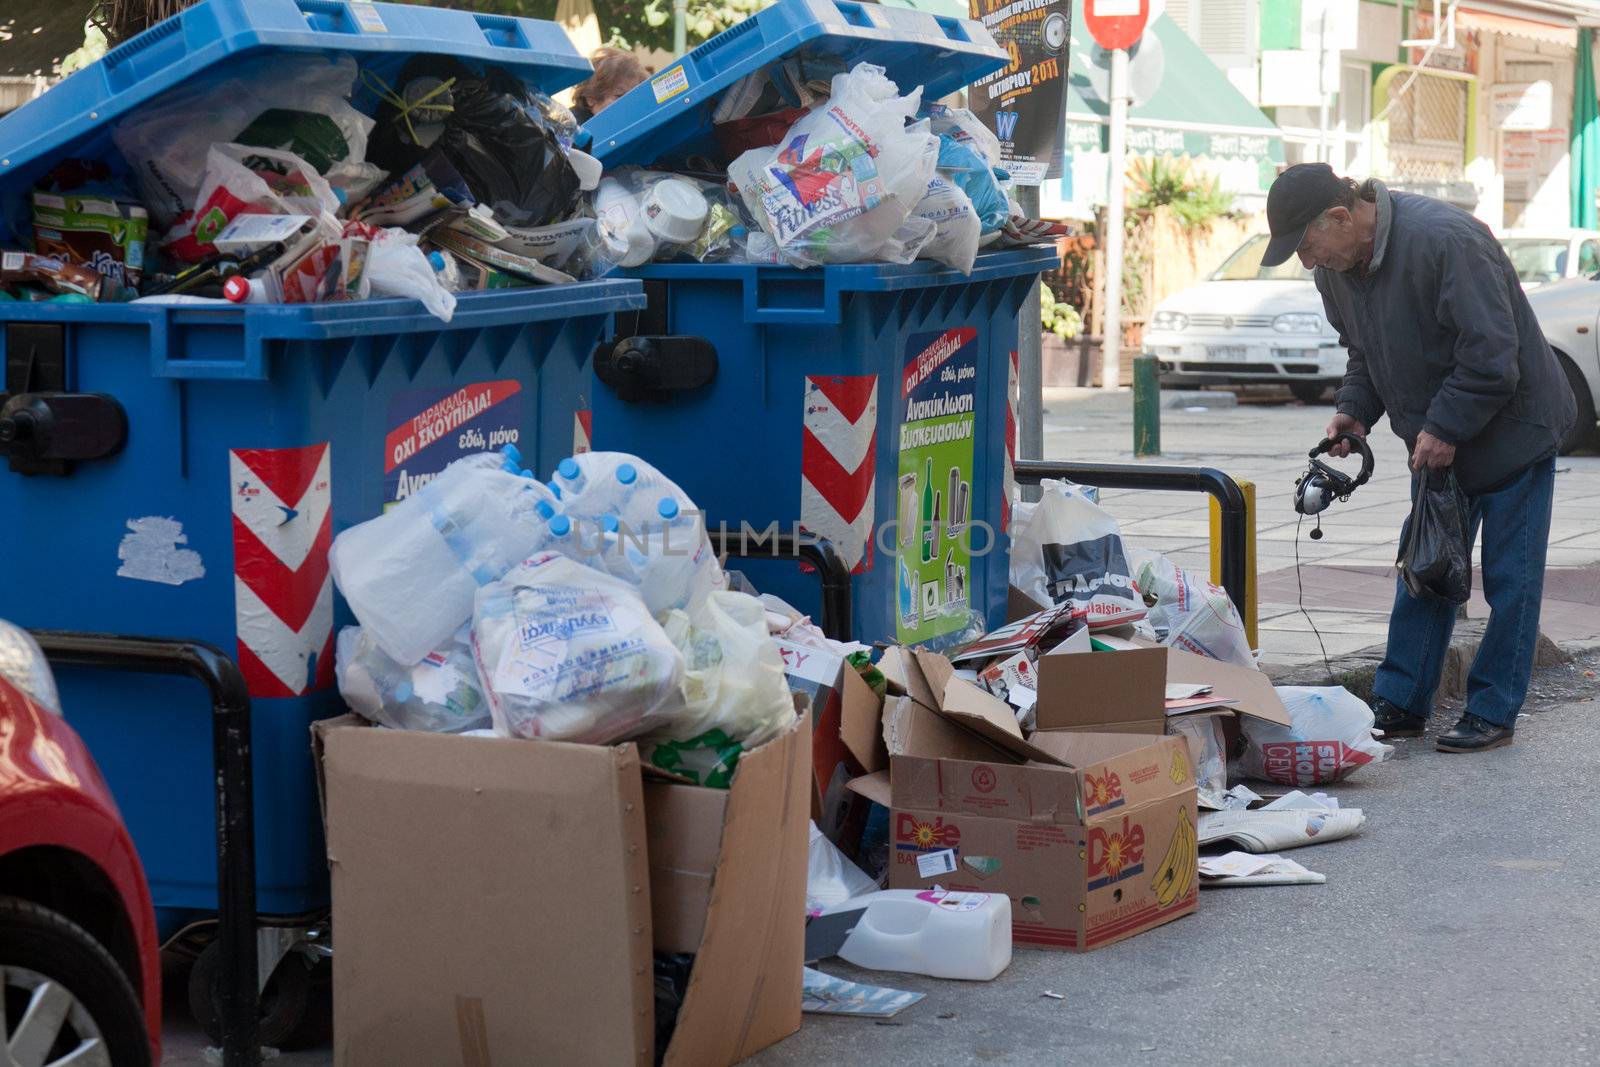 Piles of garbage by Portokalis